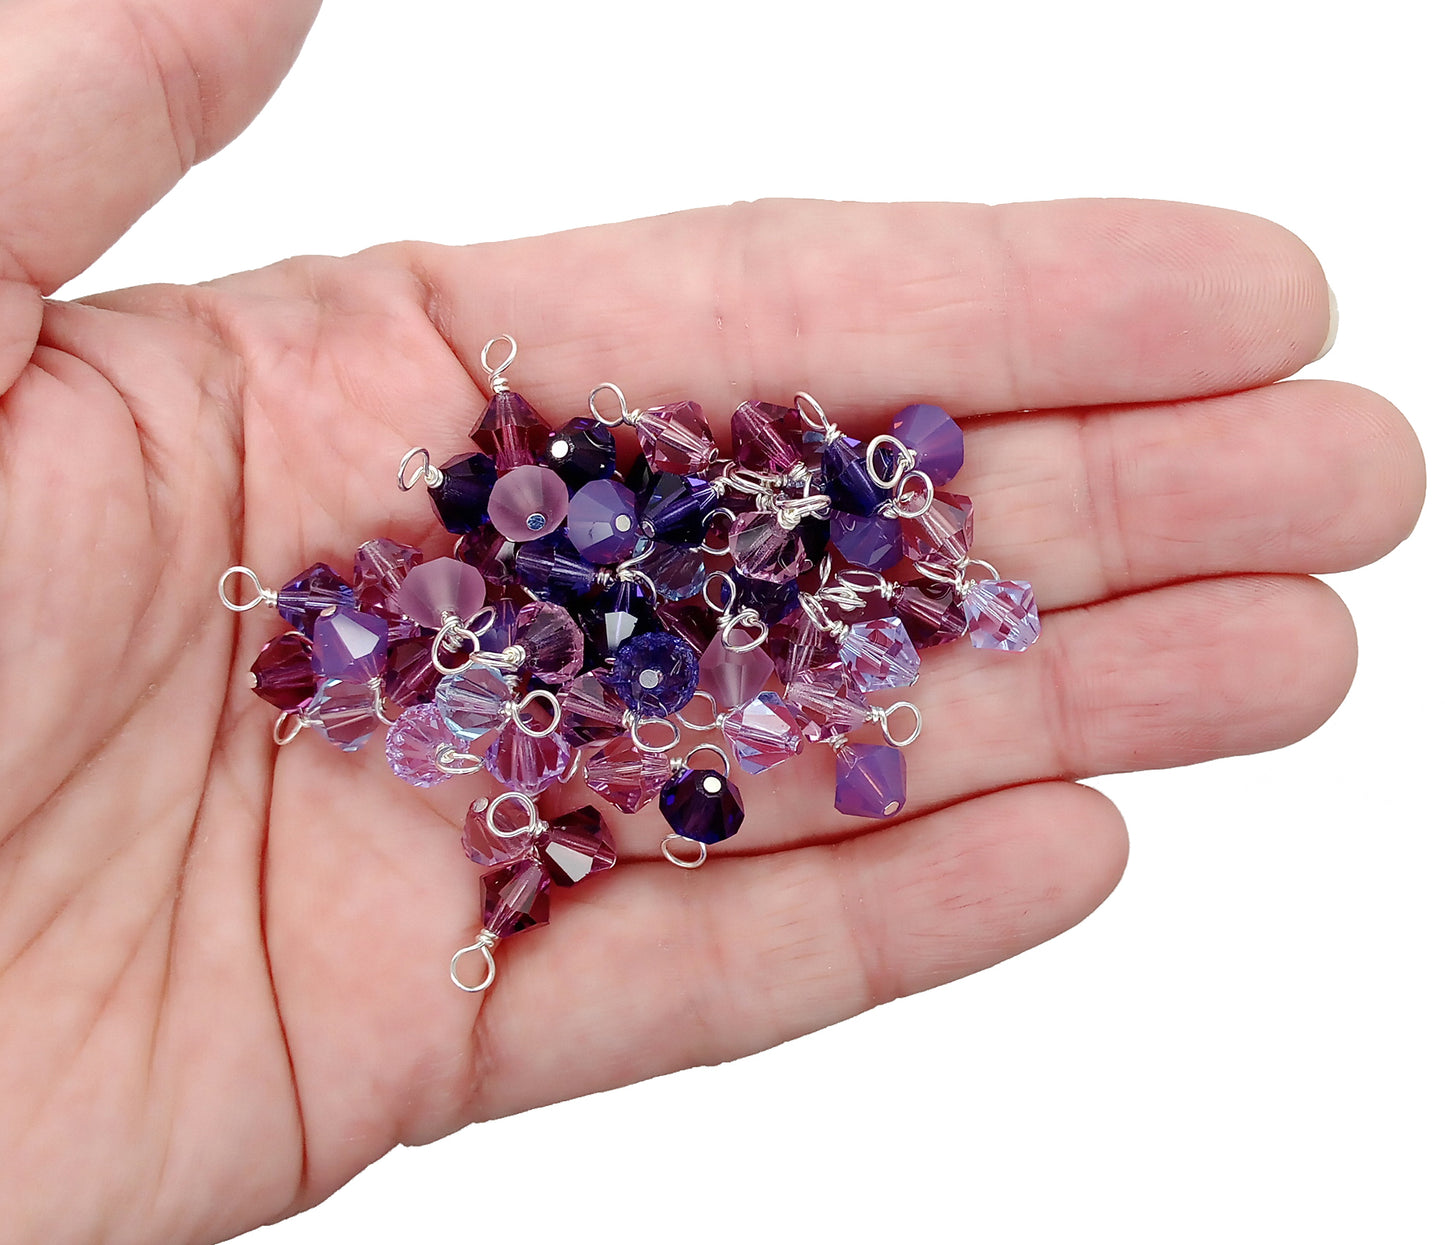 Purple Bicone Dangles, 25 Crystal 6mm Bead Charms